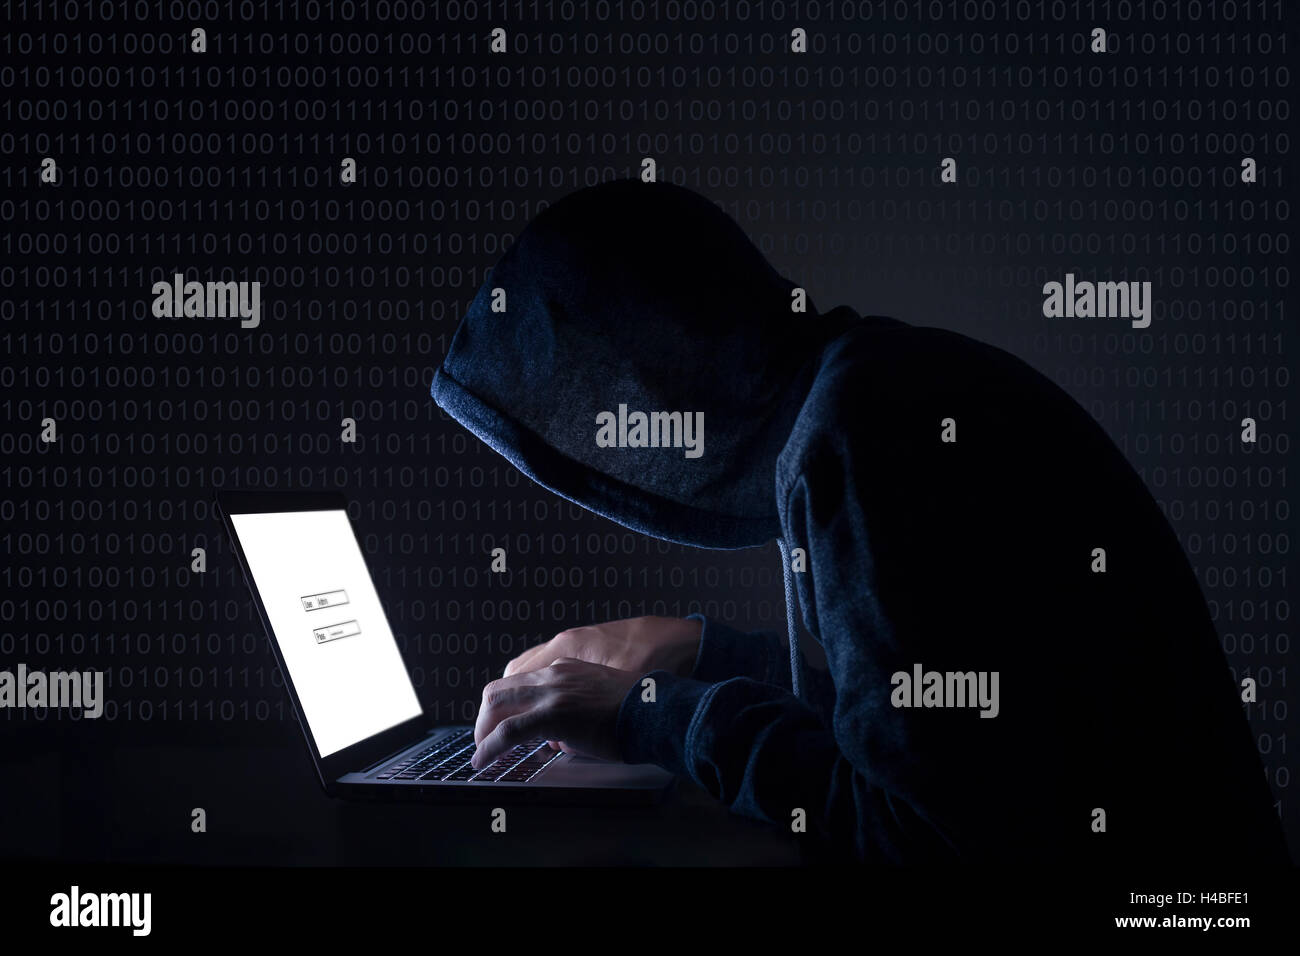 Hacker con laptop iniciando ataques cibernéticos Foto de stock